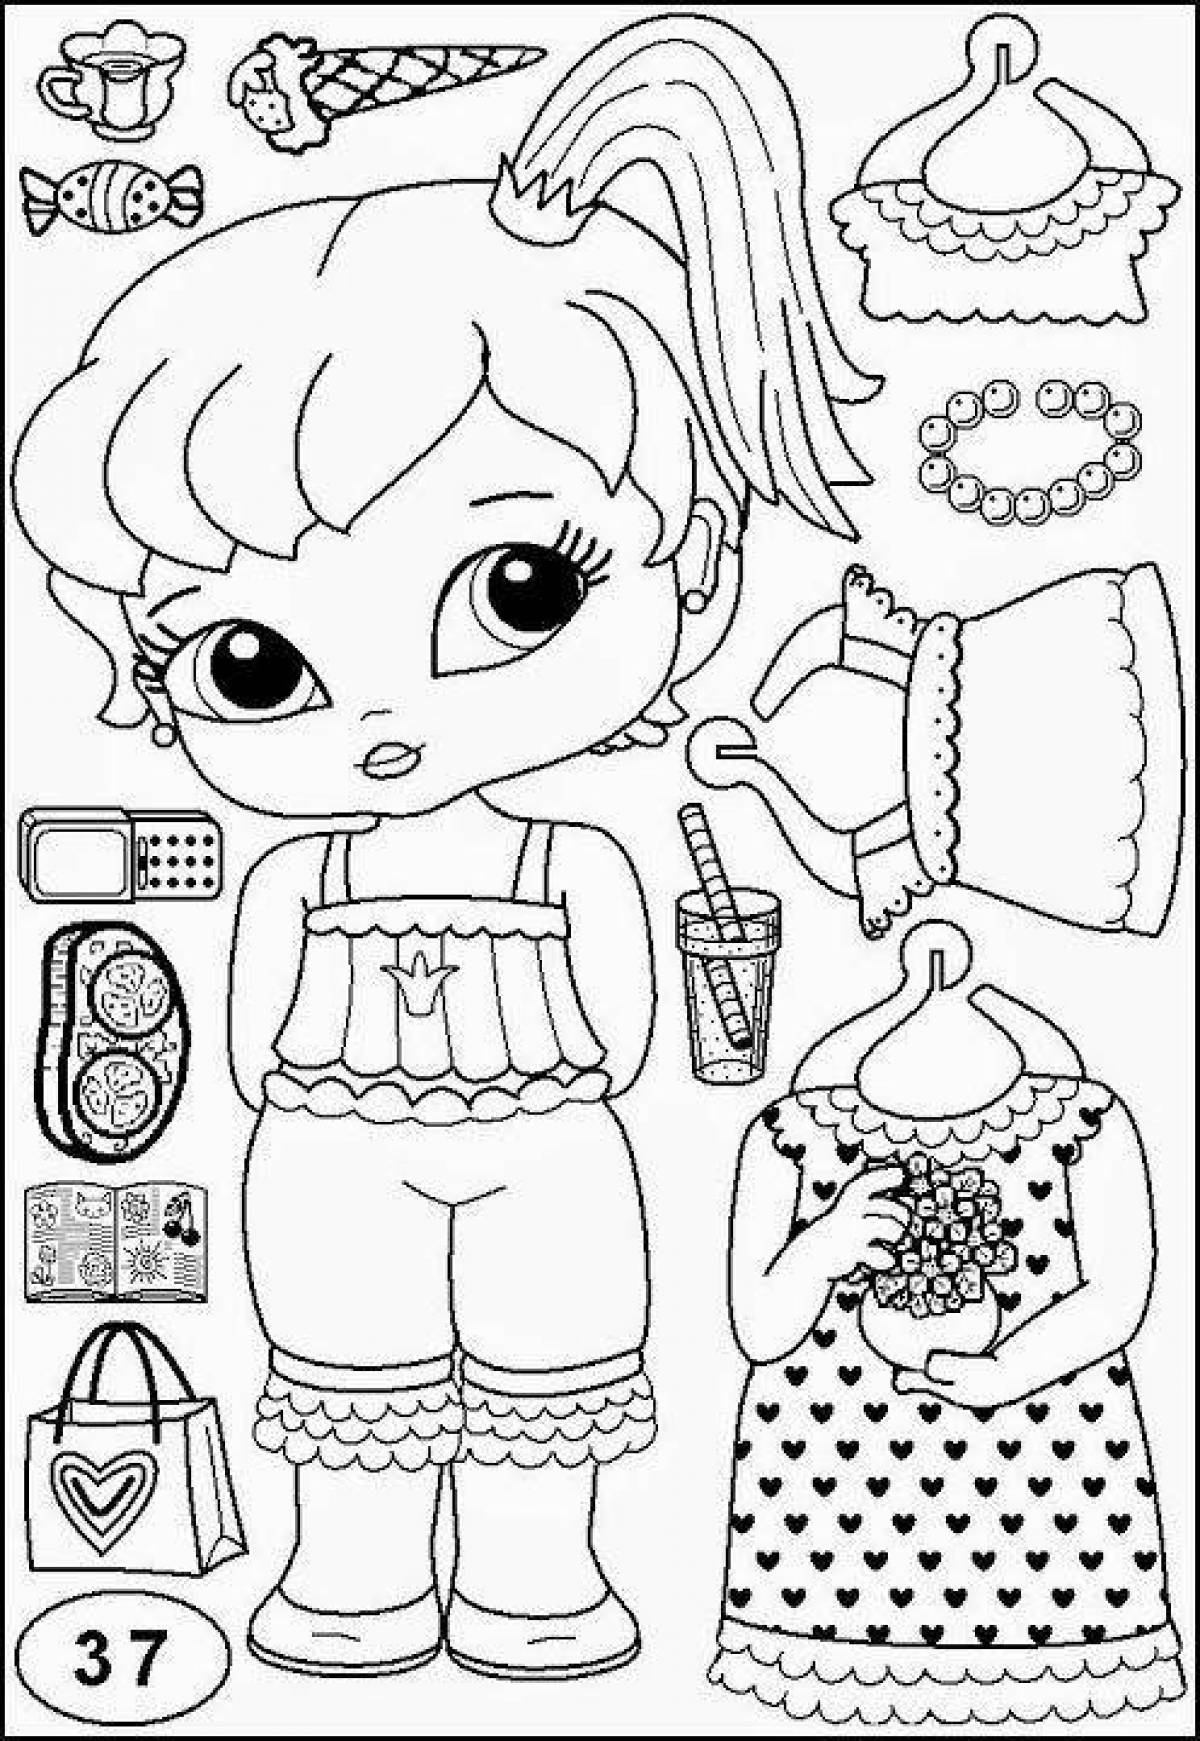 Яркая раскраска lol doll с вырезанной одеждой